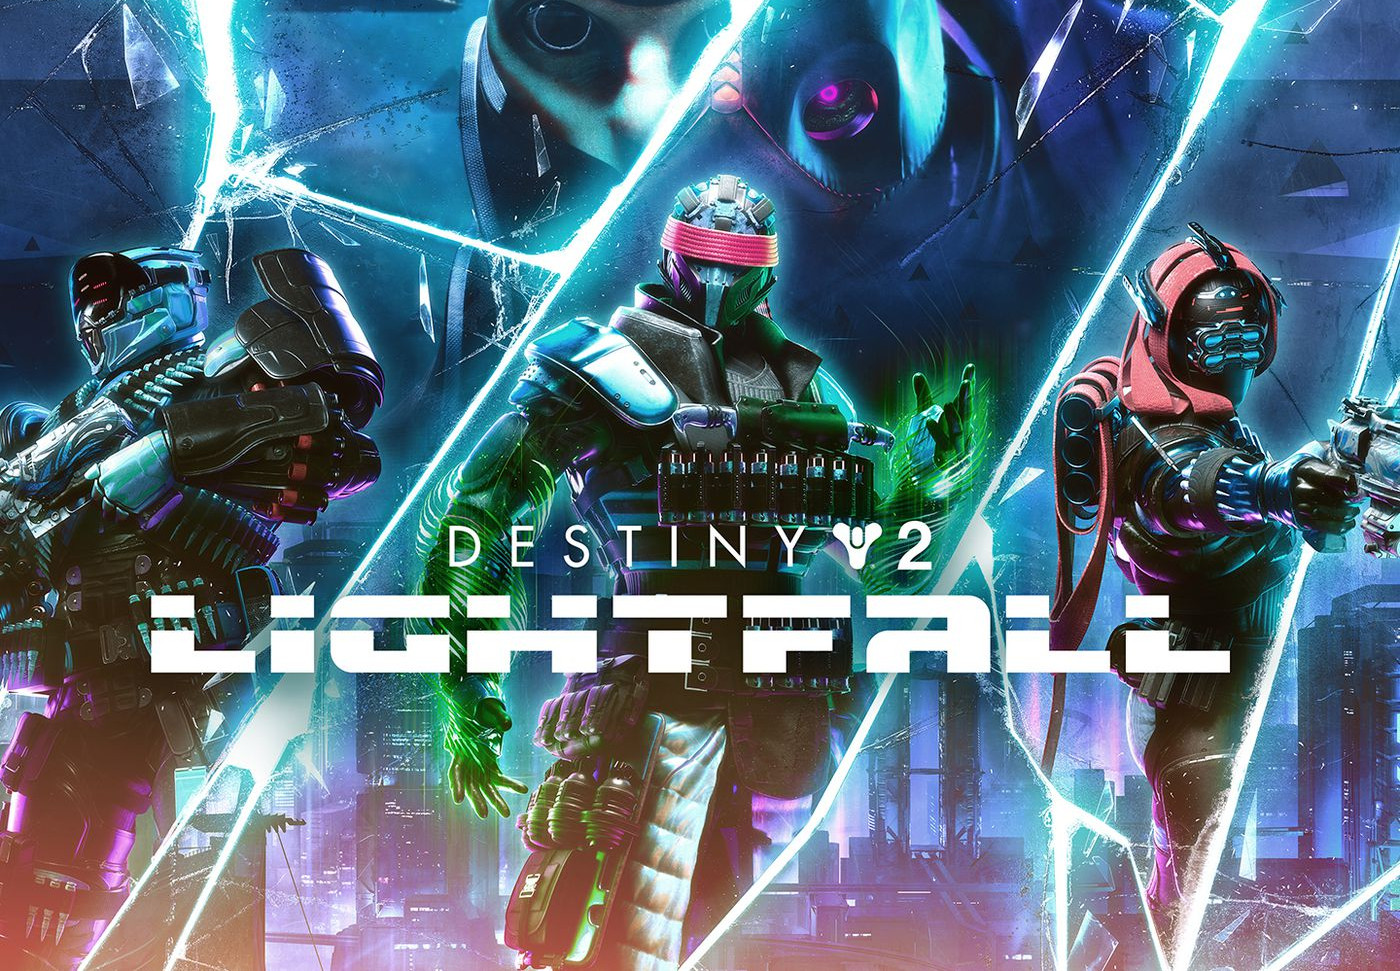 Destiny 2: Lightfall US Steam CD Key